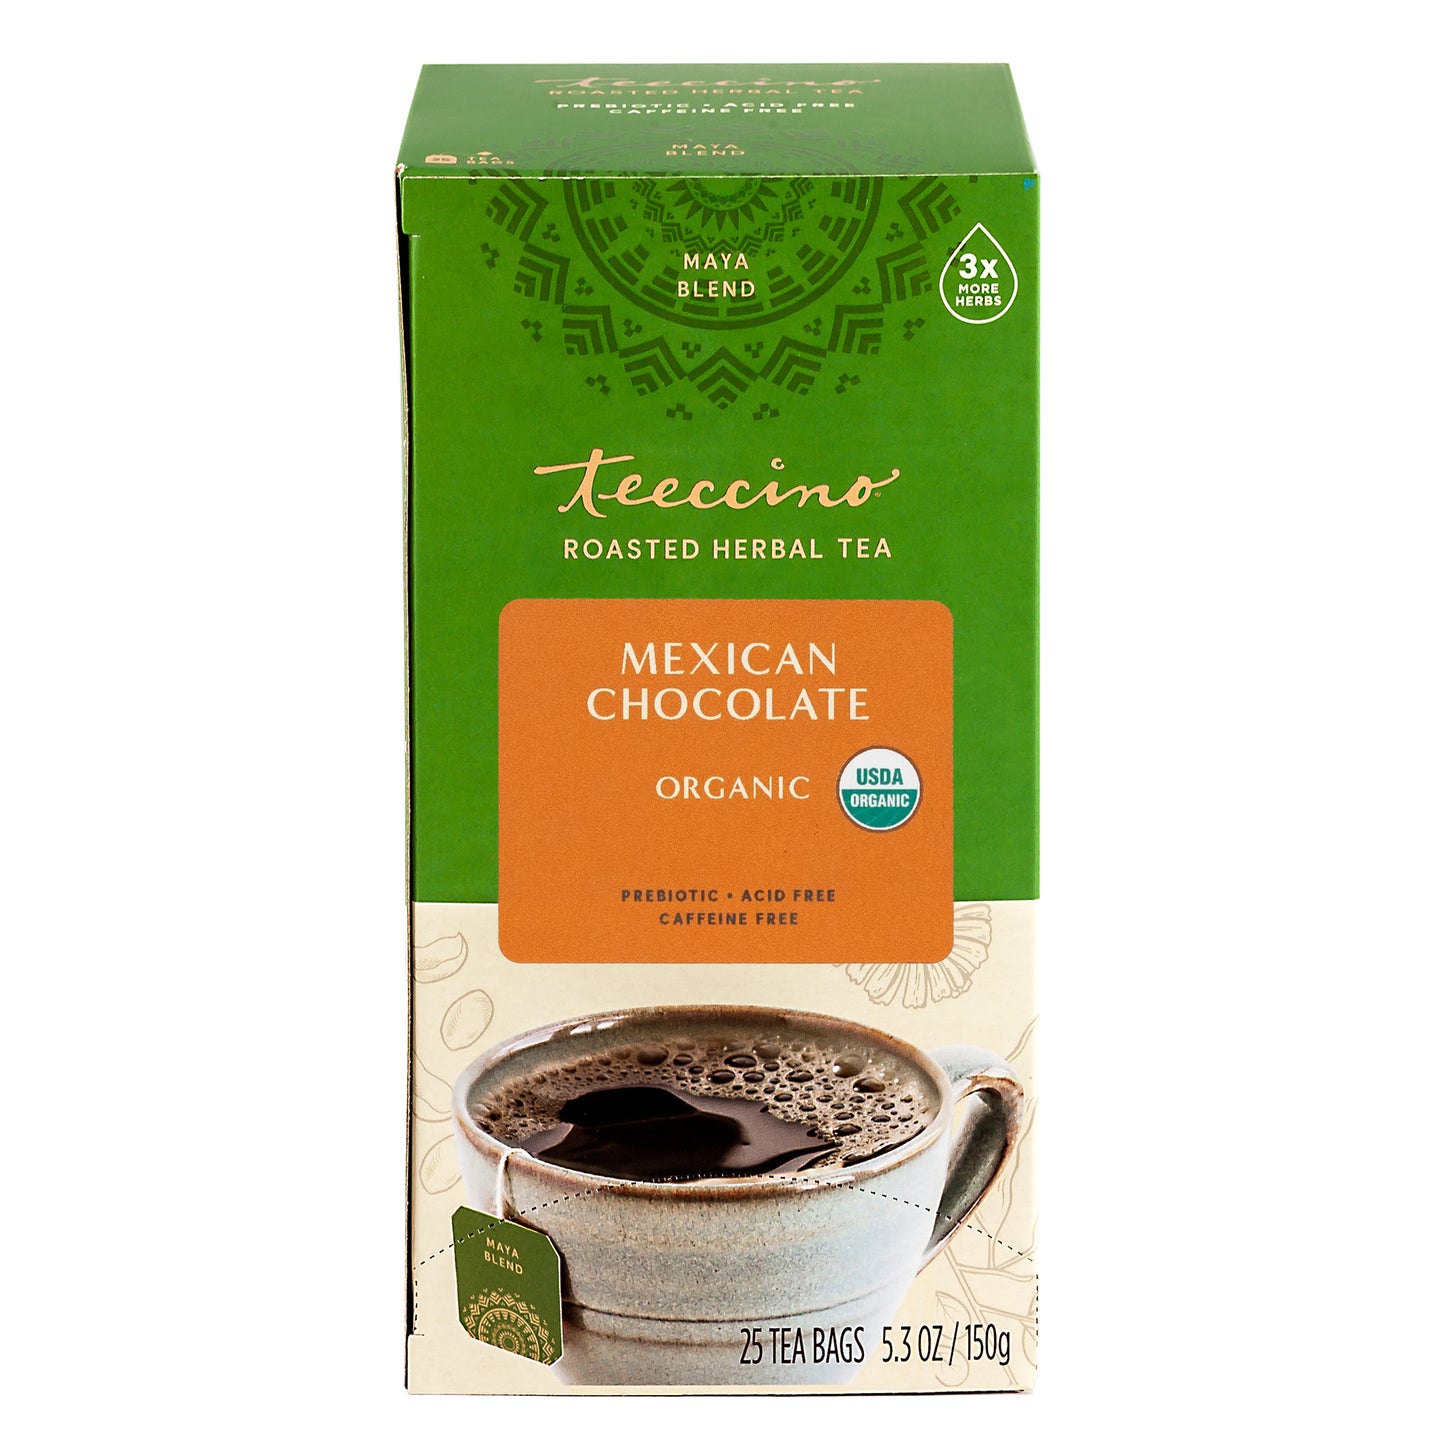 Mexican Chocolate Roasted Herbal Tea